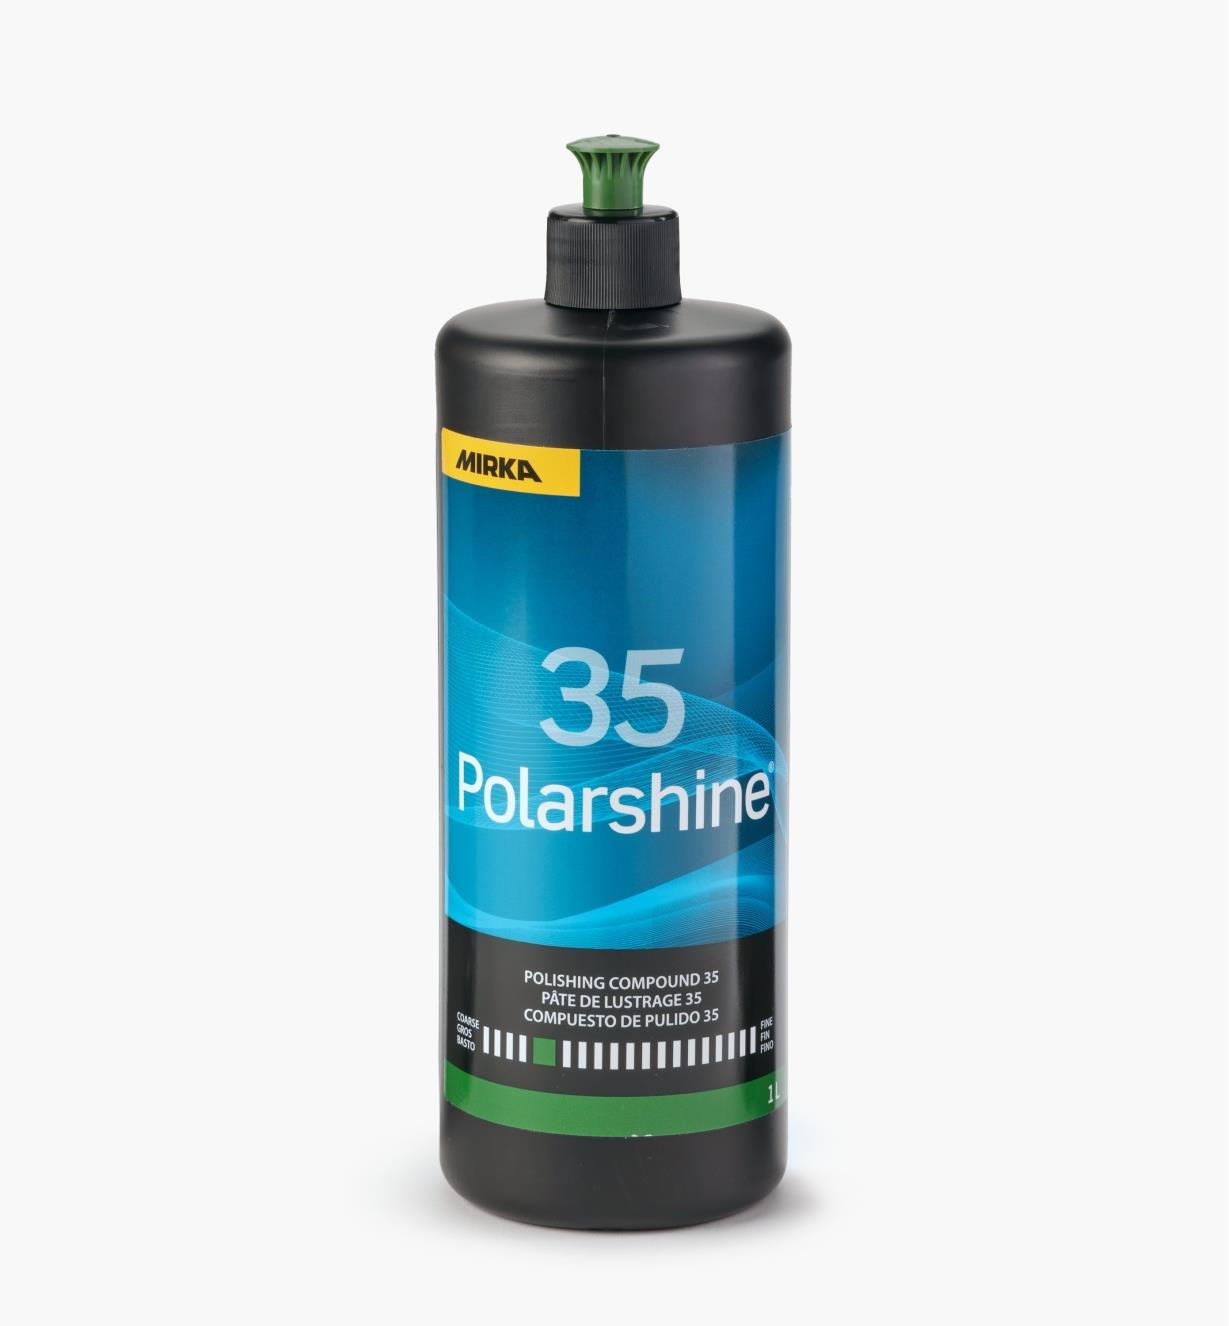 08K5002 - Mirka Polarshine 35 Polishing Compound, 1 litre